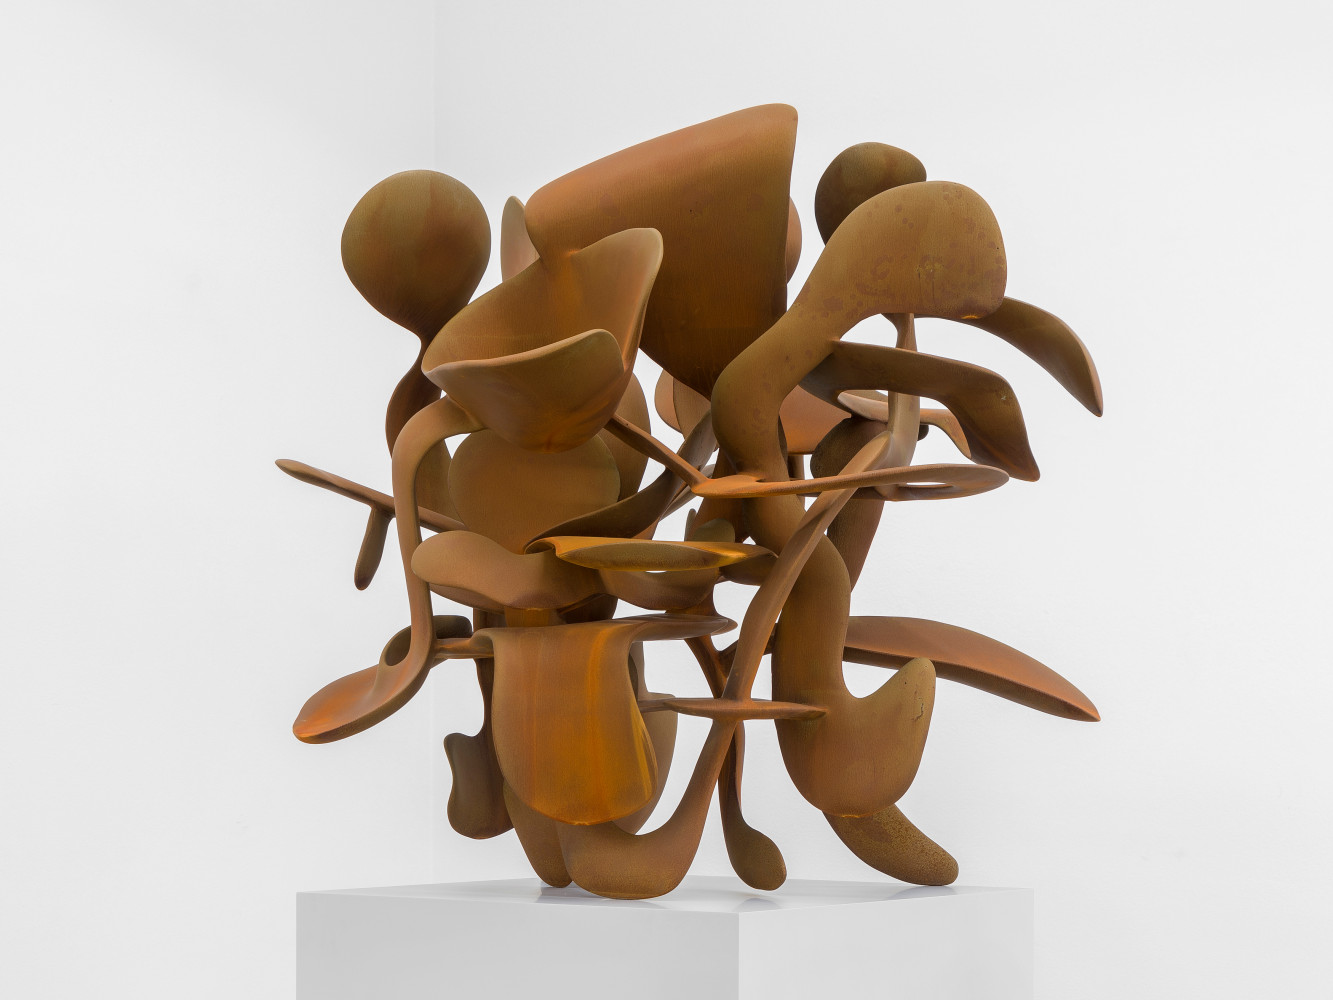 Tony Cragg, ‘Untitled (Hedge Berlin II)’, 2018, solid steel 